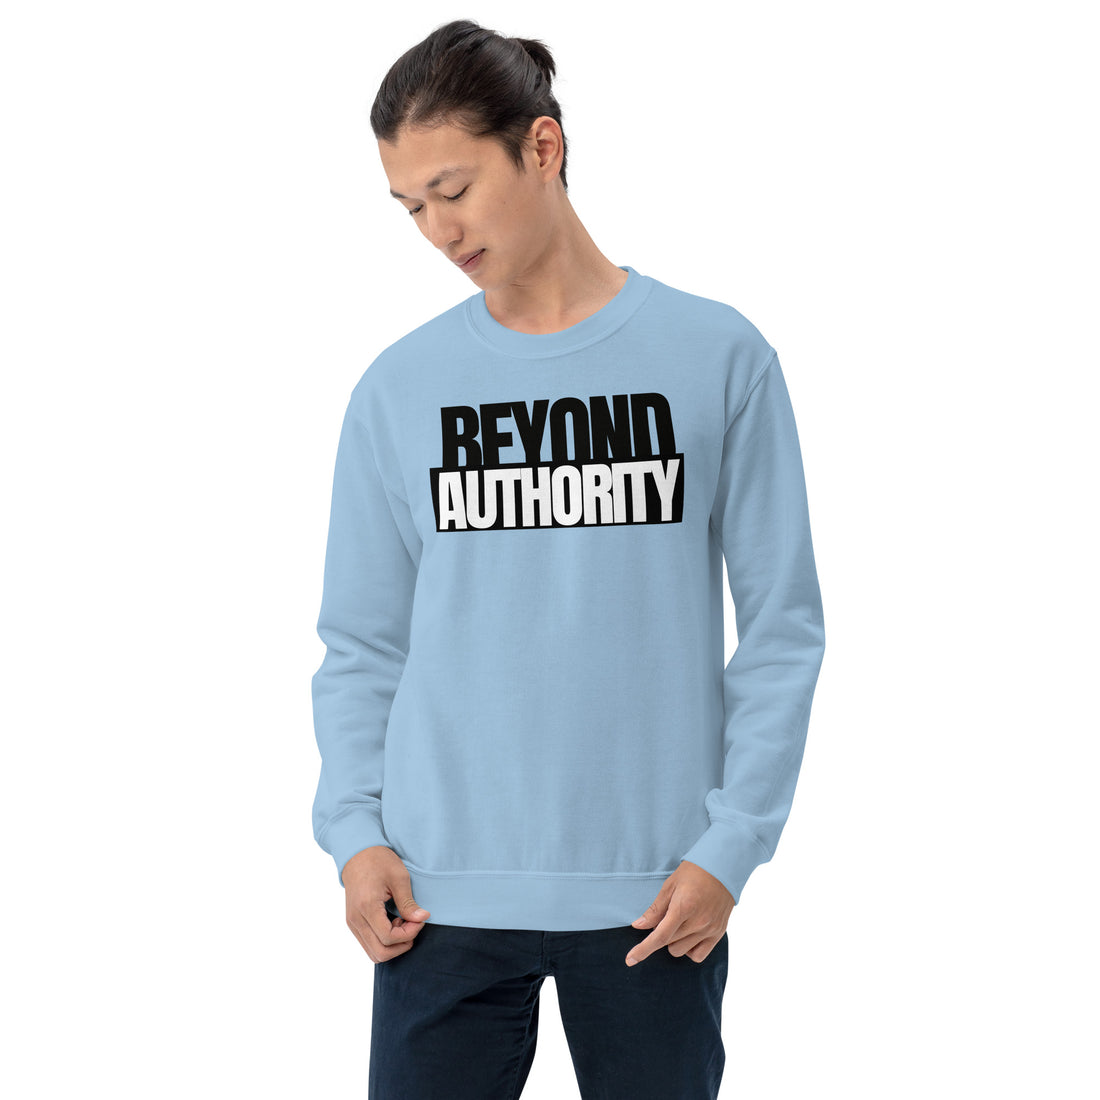 Unique Printed Sweatshirt | Cozy Printed Sweatshirt | Beyond Authority